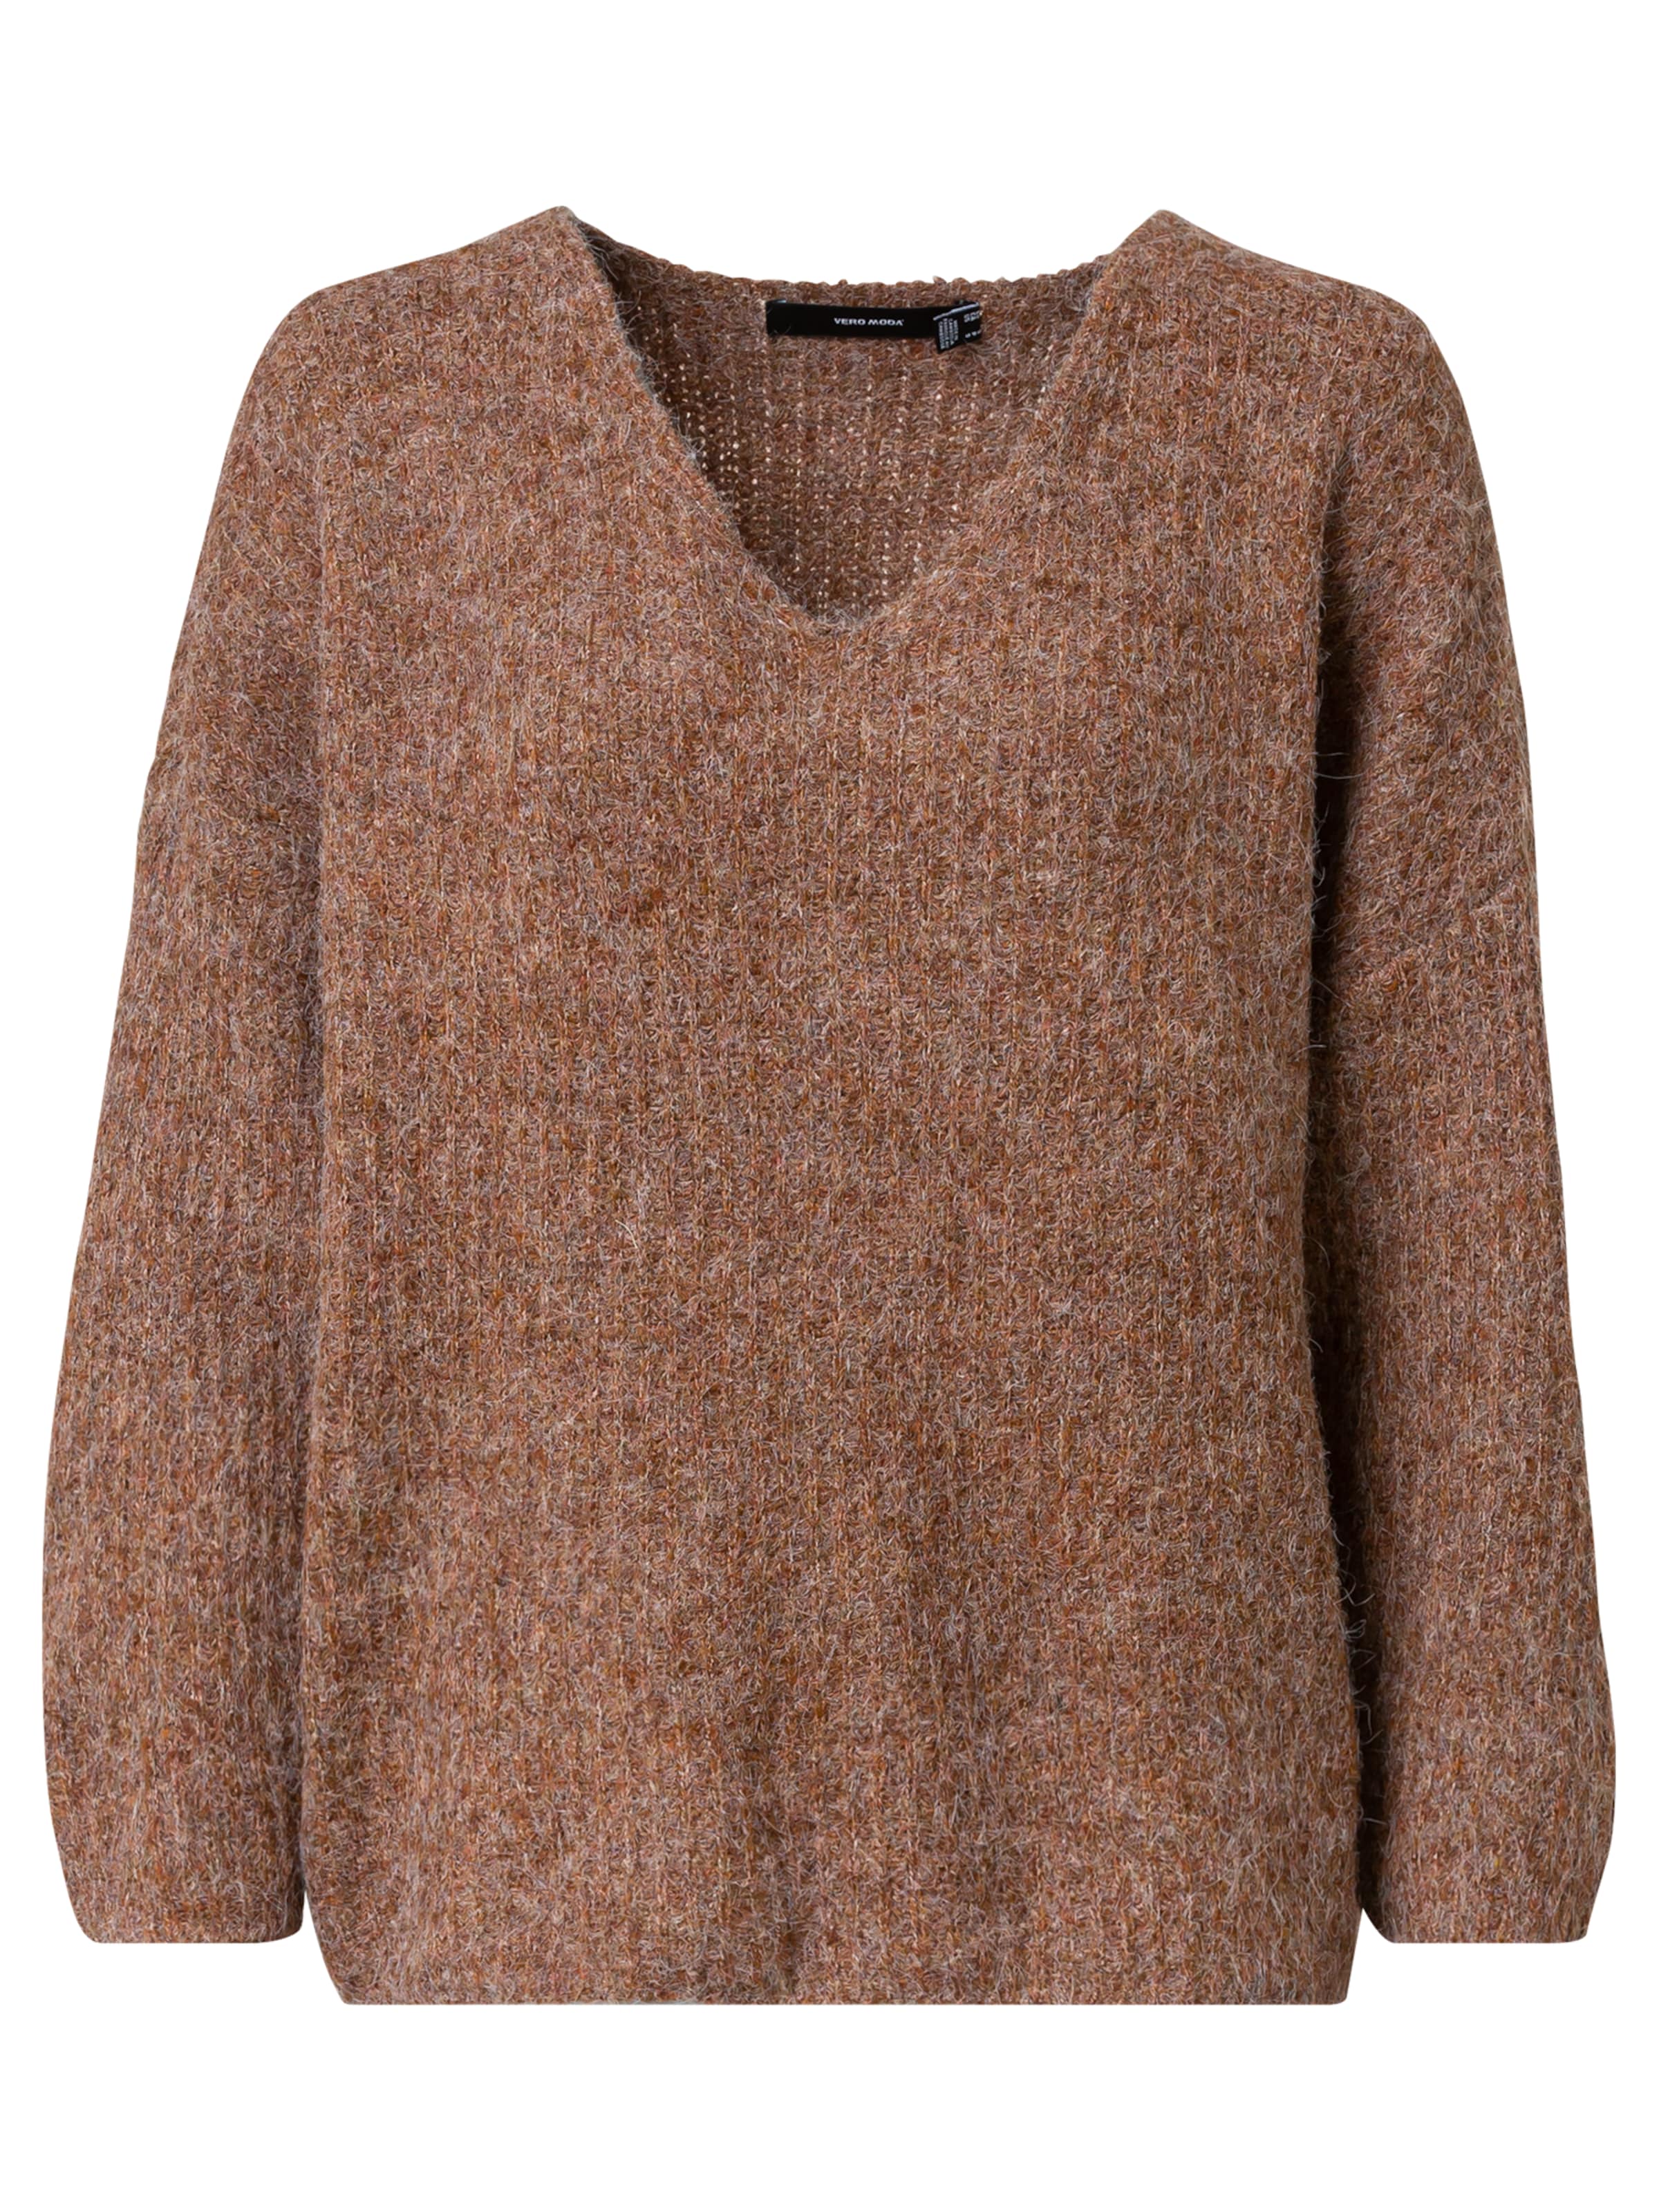 Grün S Vero Moda Pullover Rabatt 96 % DAMEN Pullovers & Sweatshirts Stricken 